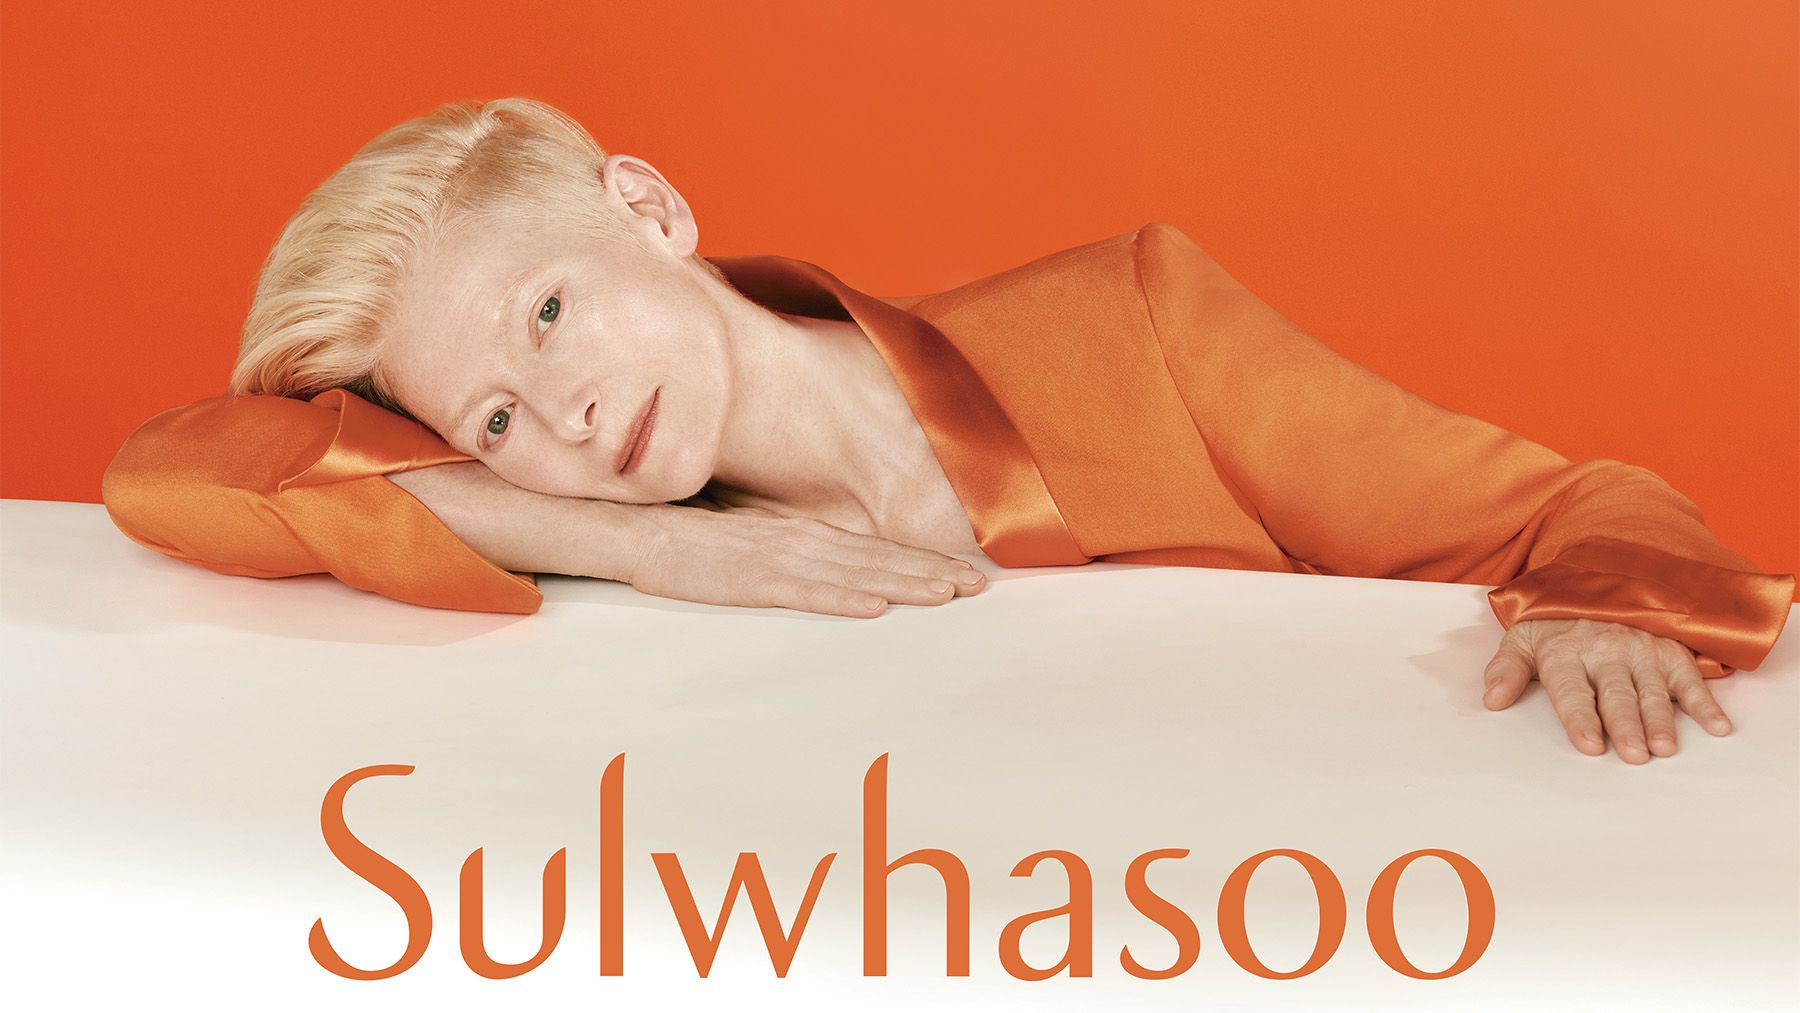 Sulwhasoo Names Actress Tilda Swinton as Global Ambassador